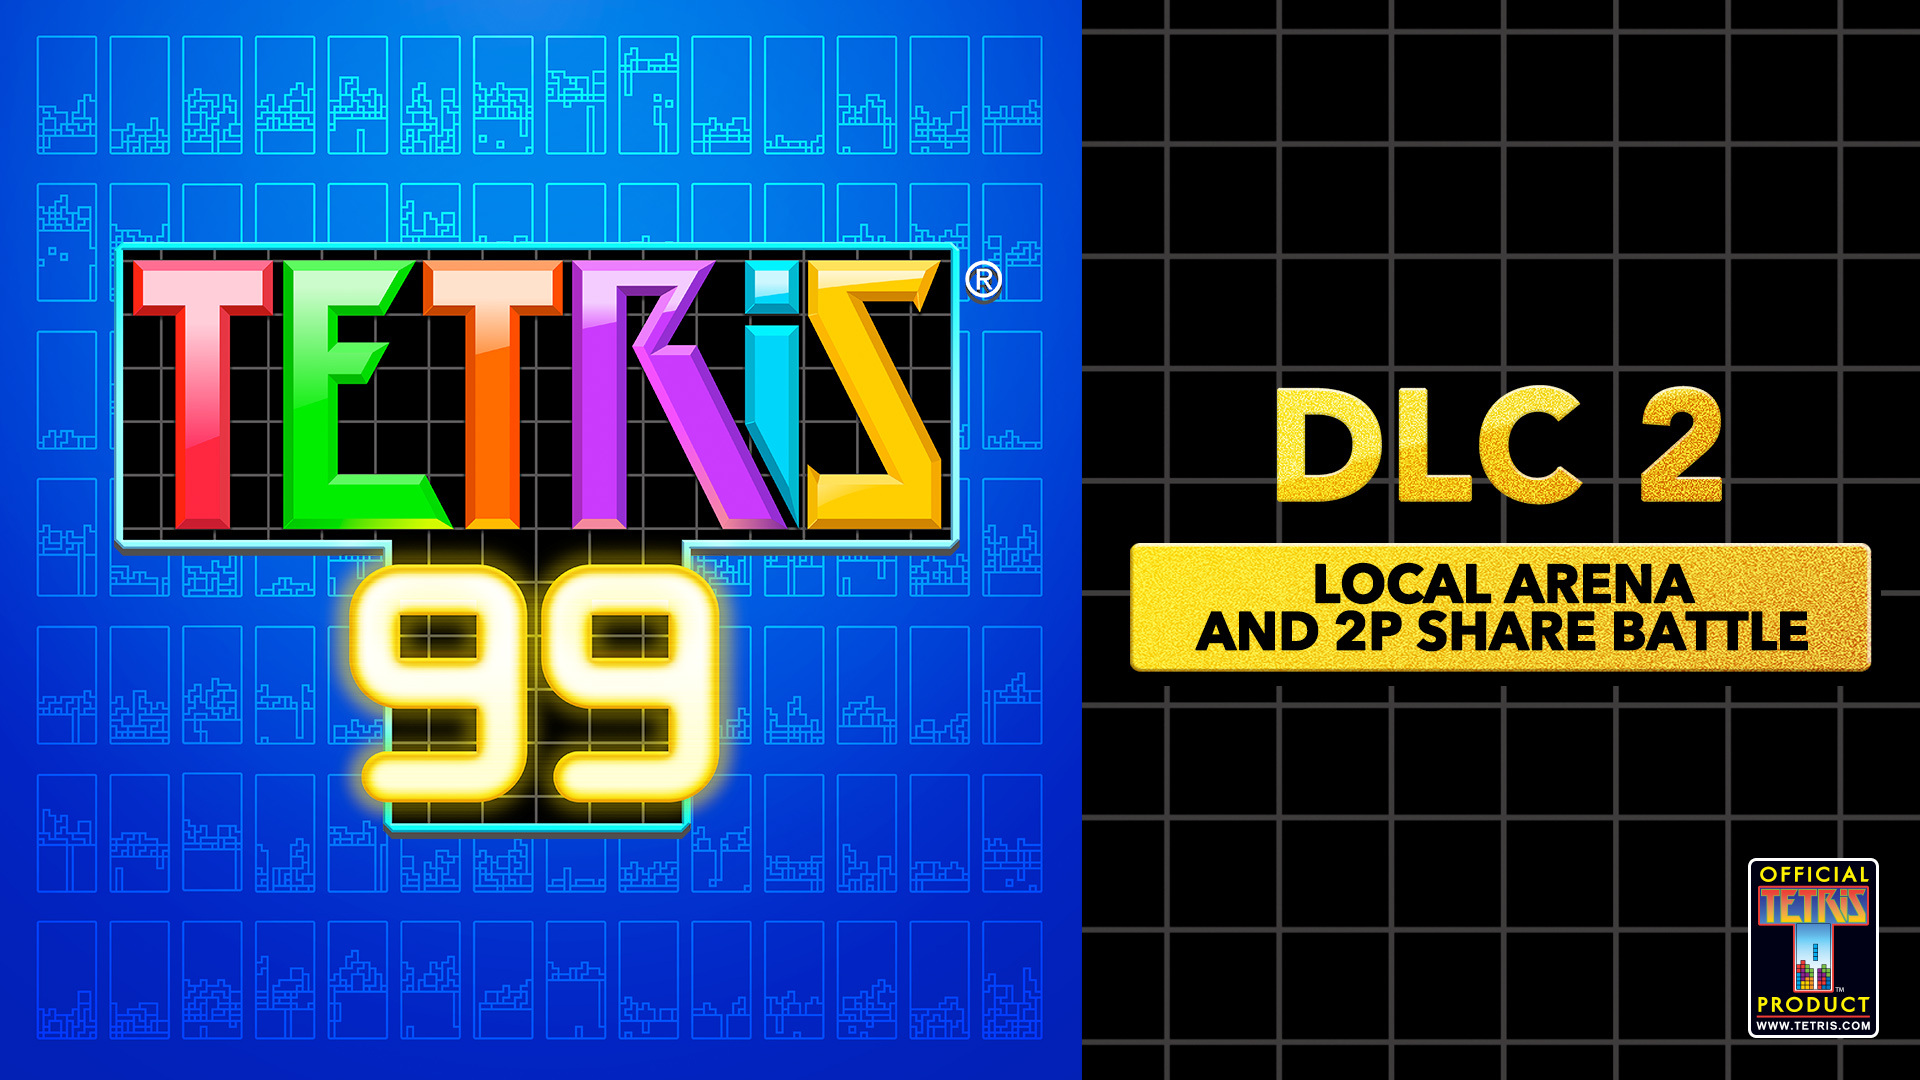 tetris 99 online with friends